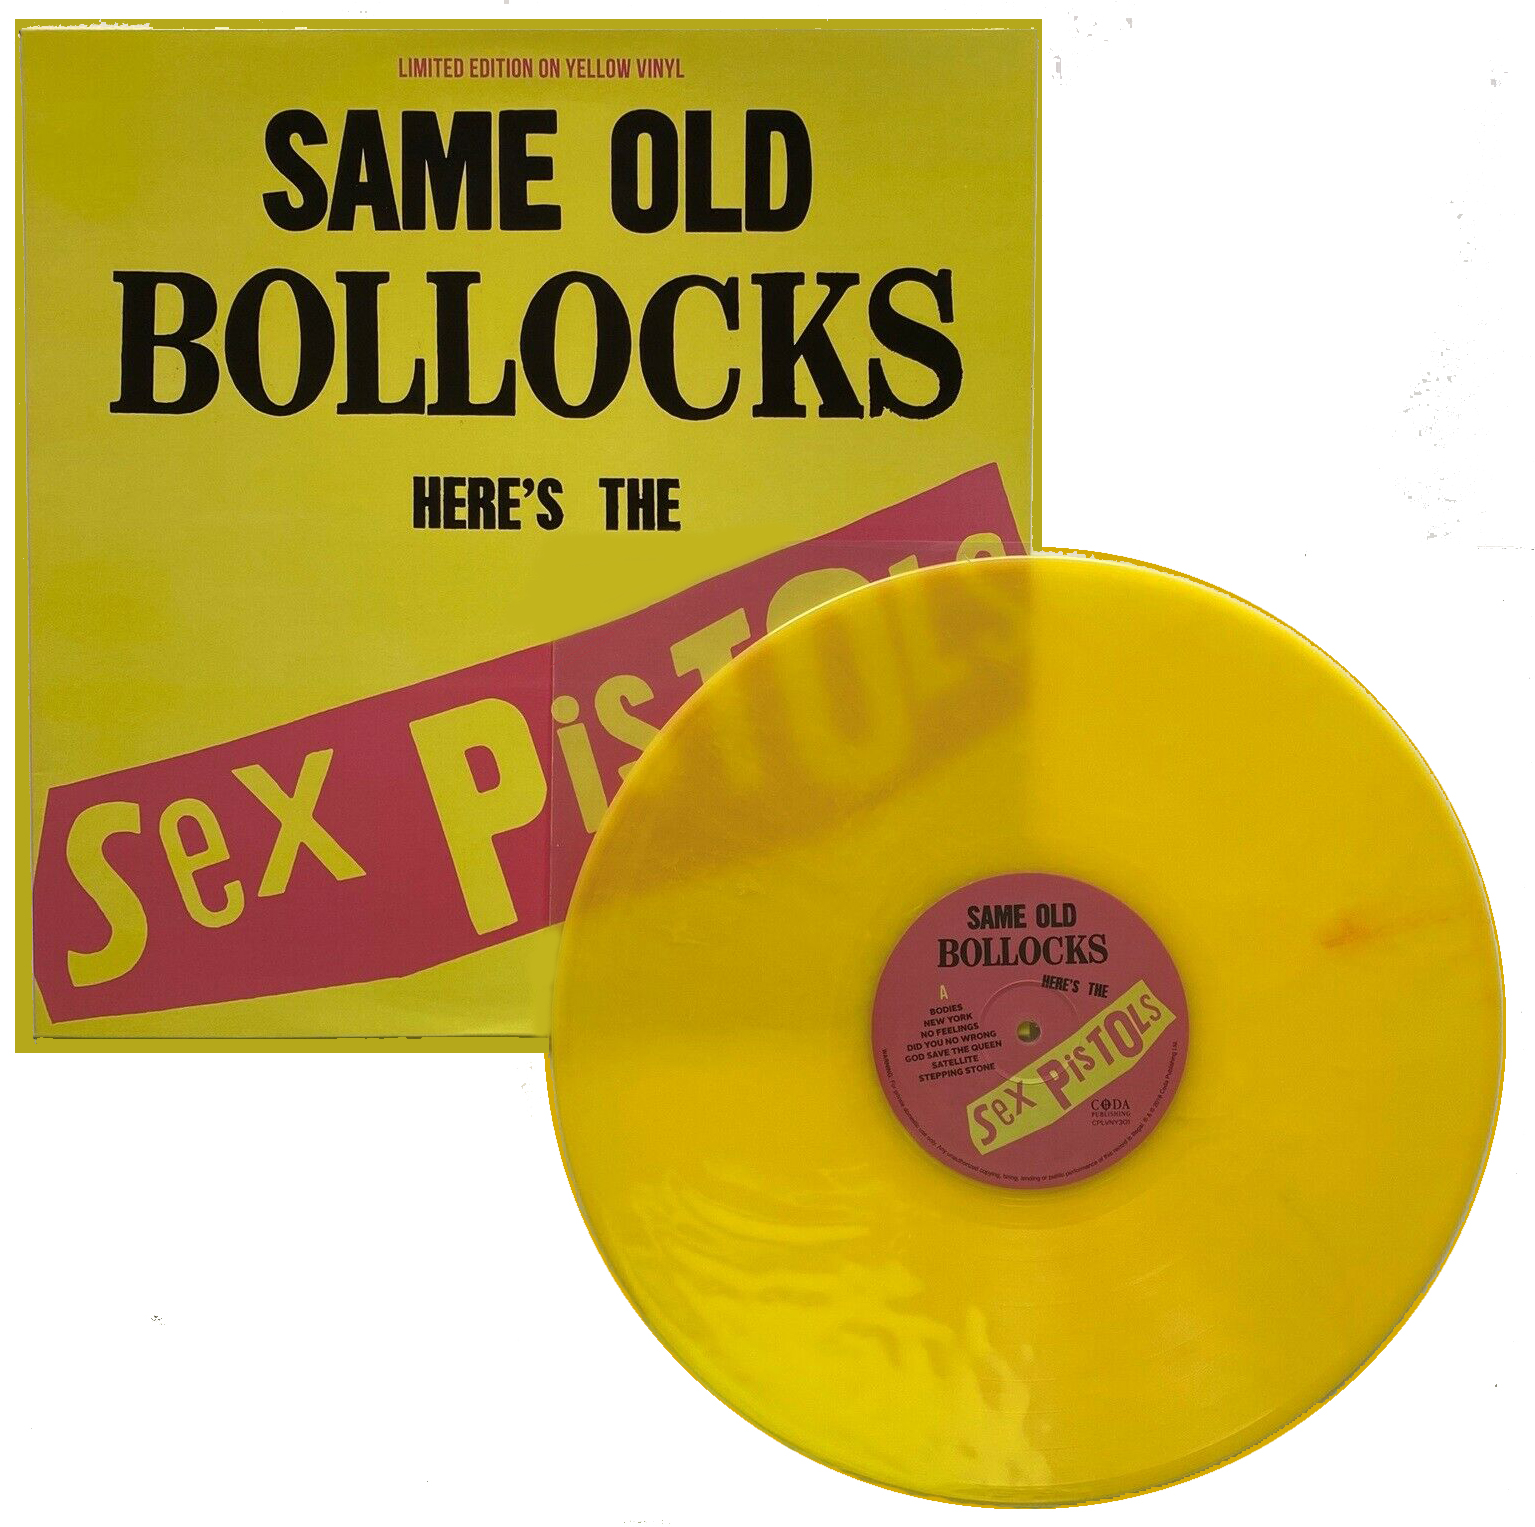 same-old-bollocks-yellow-vinyl-good